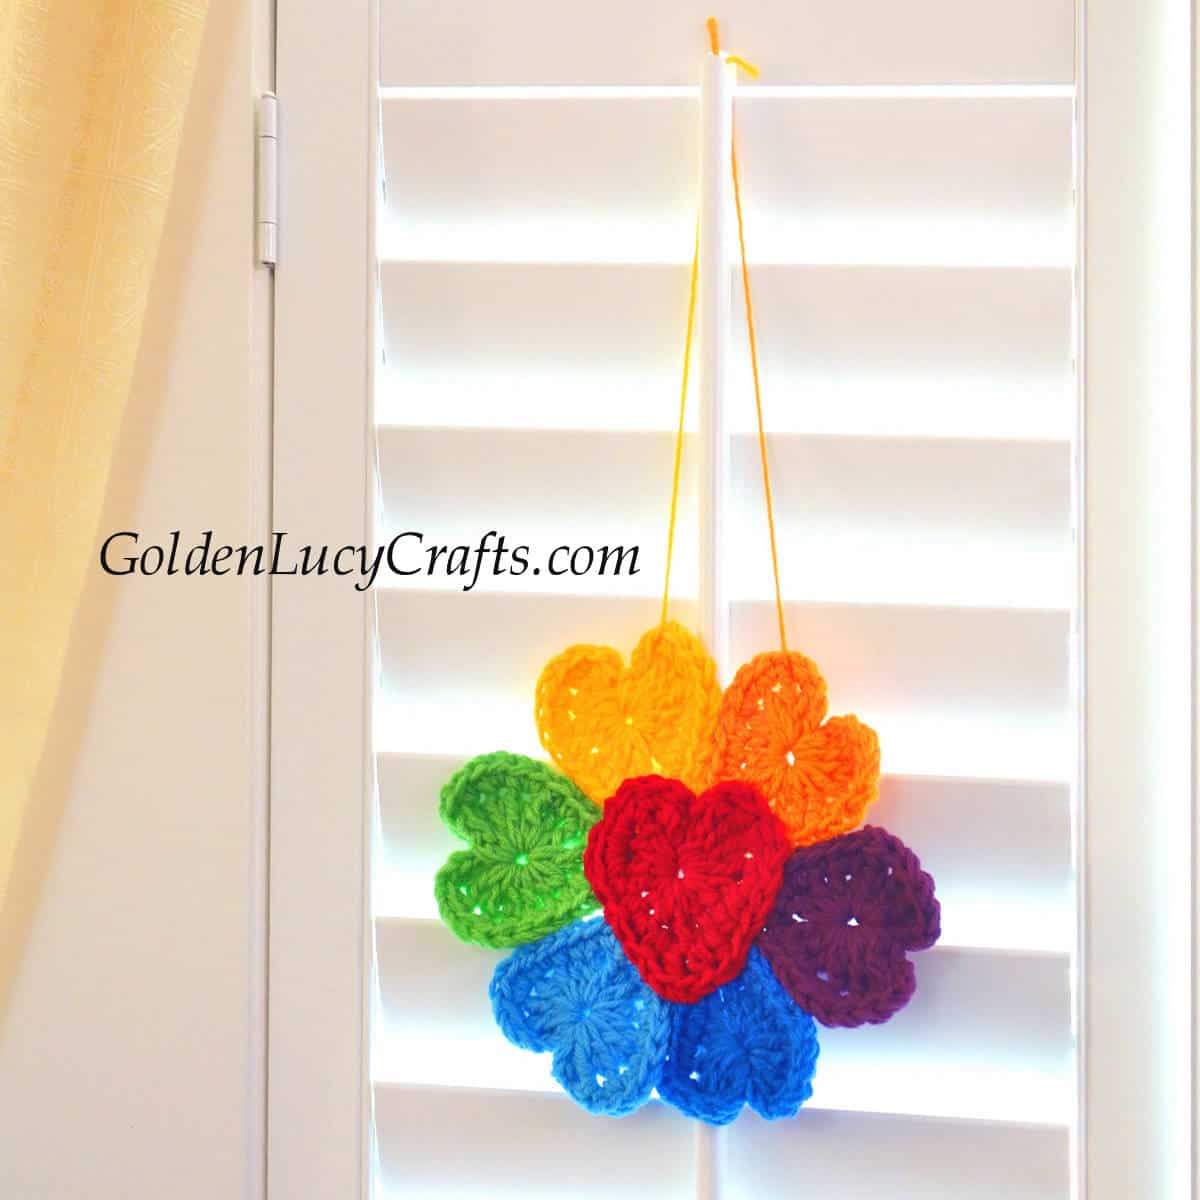 Crochet rainbow flower hanging on the window.